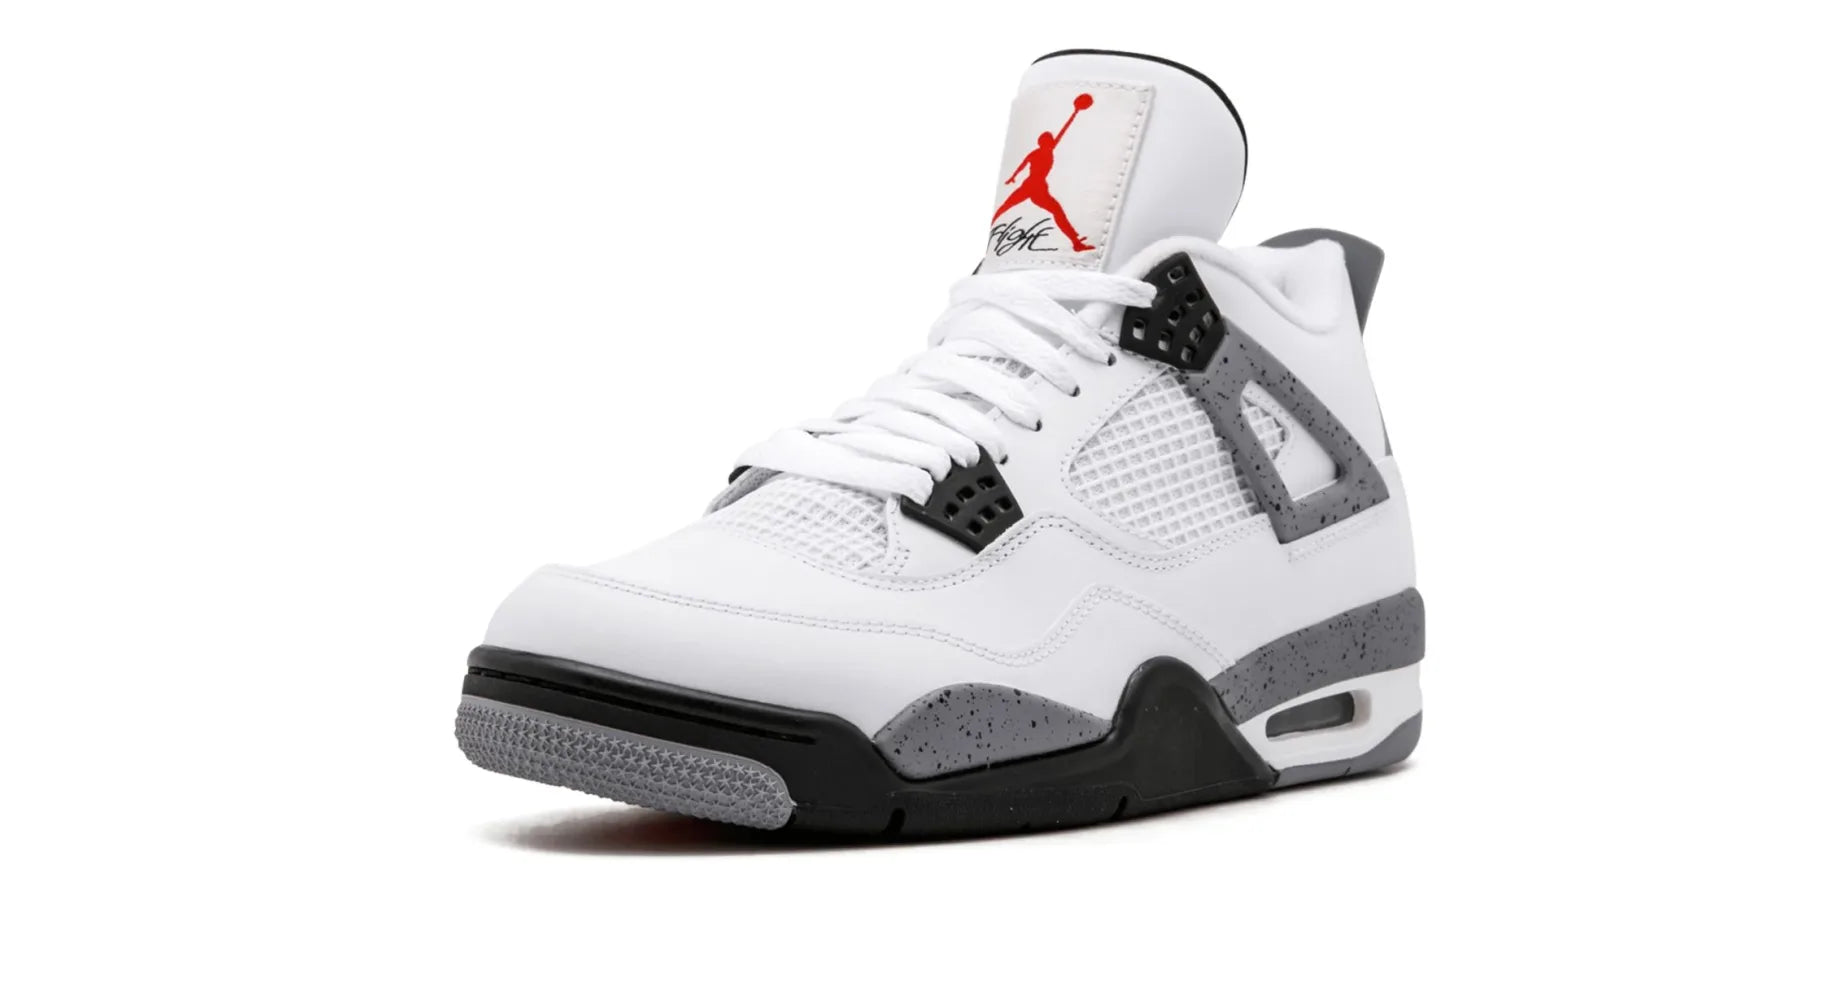 Jordan 4 Retro White Cement (2012)